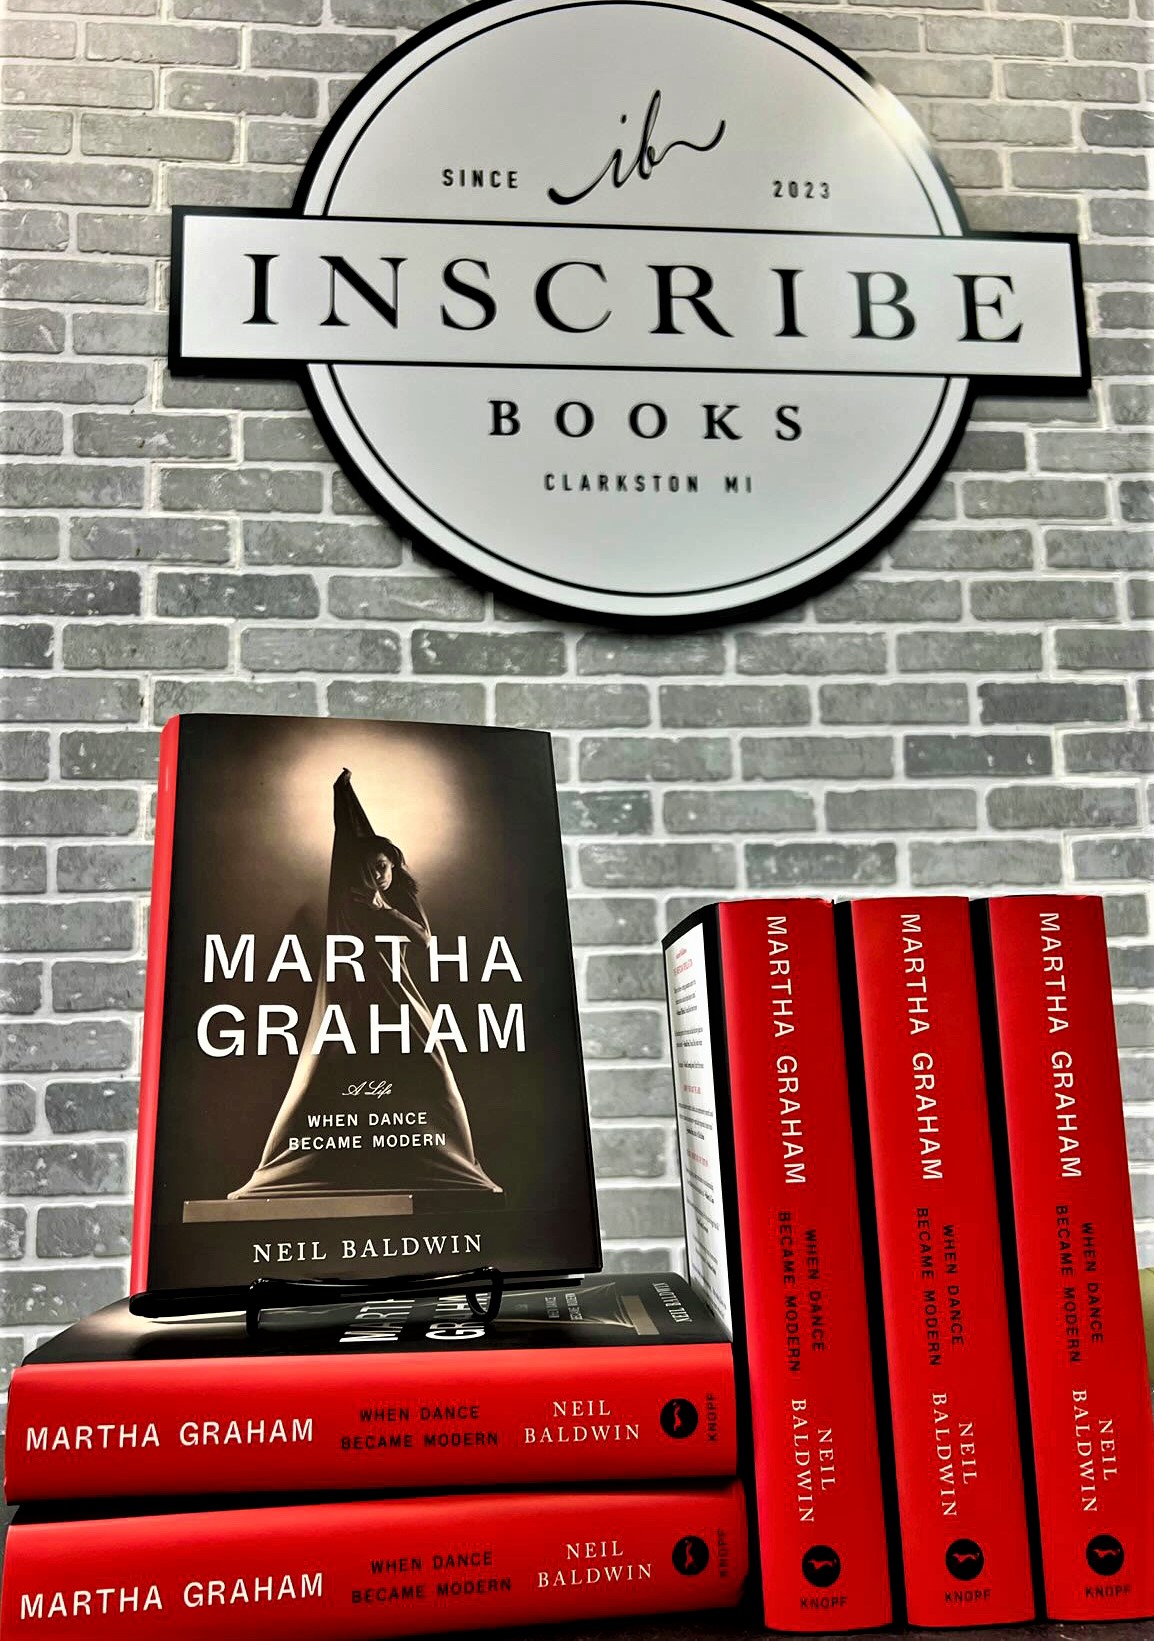 MARTHA sighting @ Inscribe Books, a brave new “indie” in Clarkston, Michigan